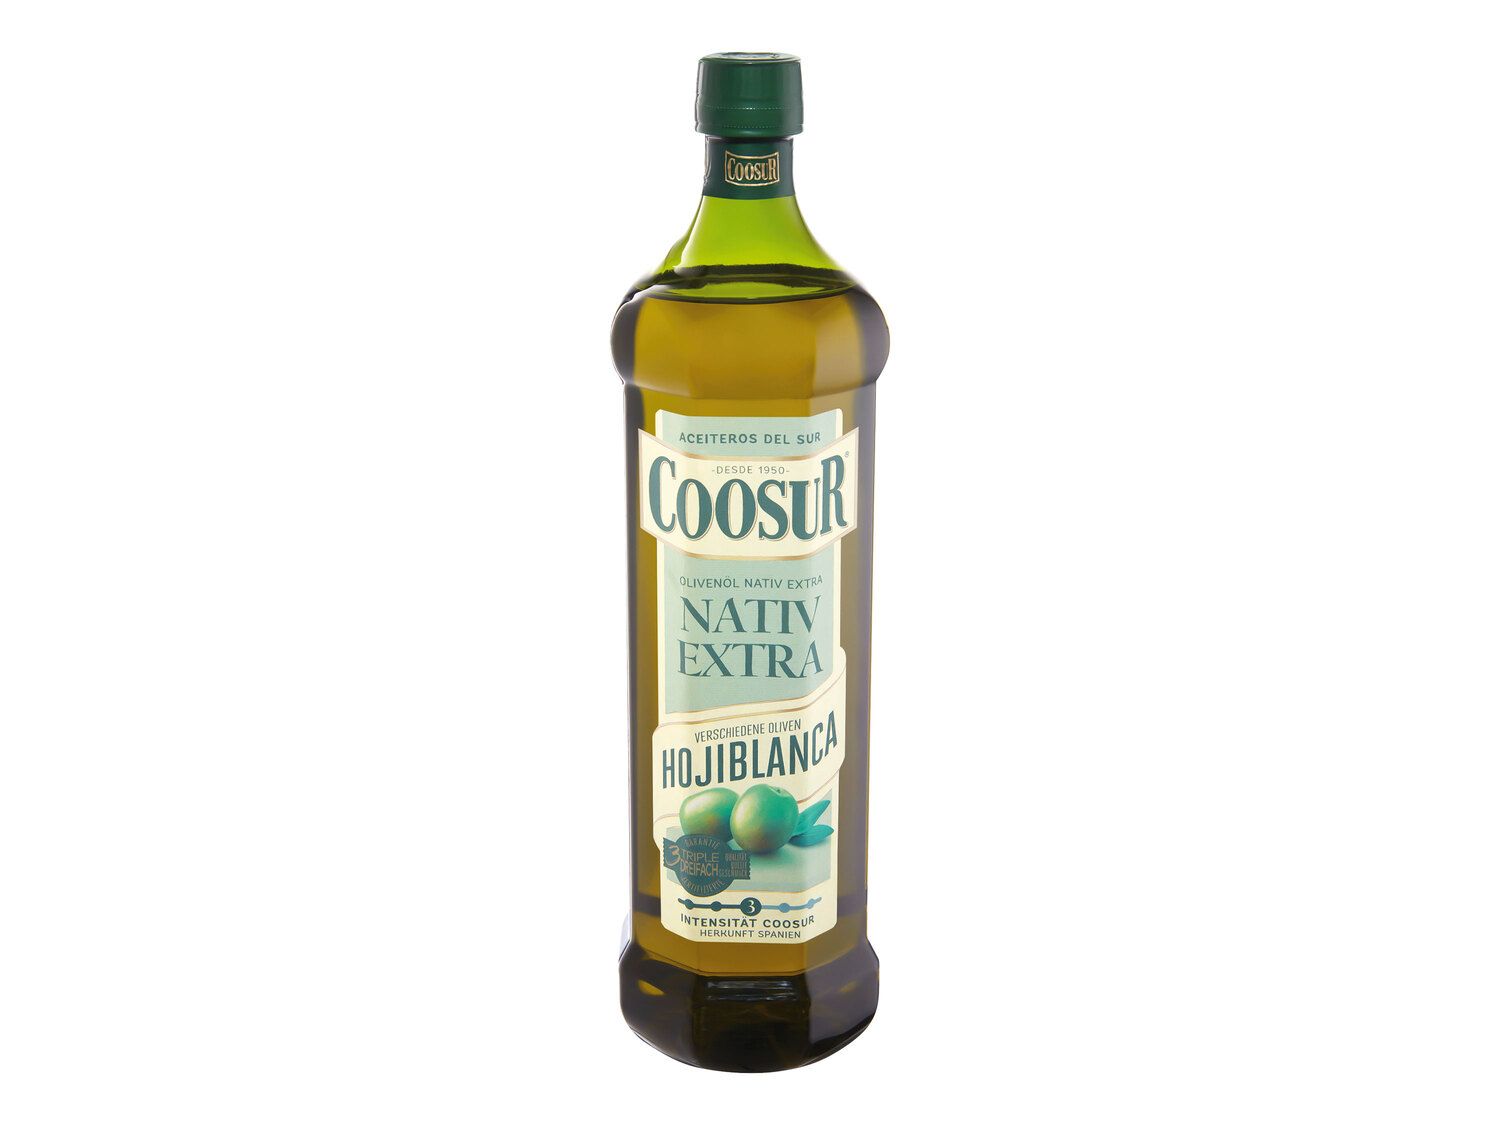 Coosur Hojiblanca Olivenöl - Lidl Deutschland